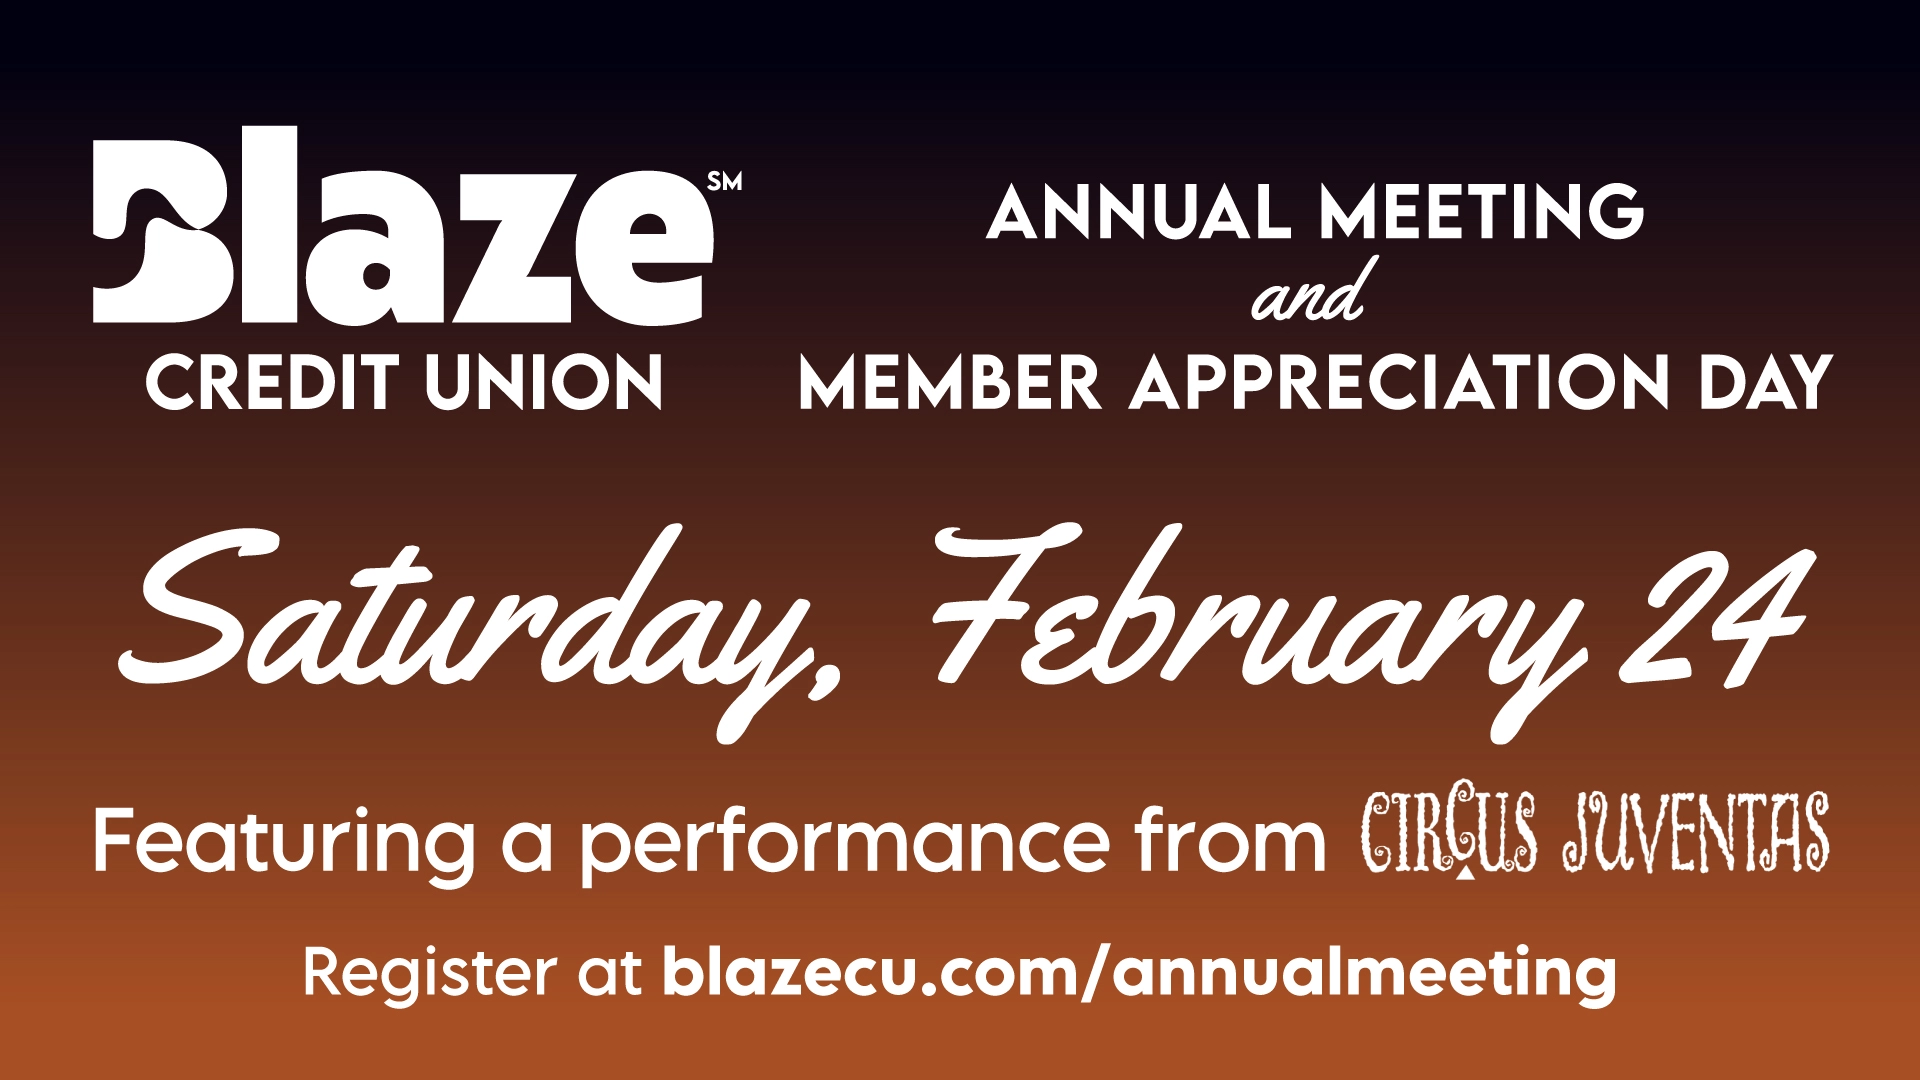 Annual Meeting Saturday, February 24